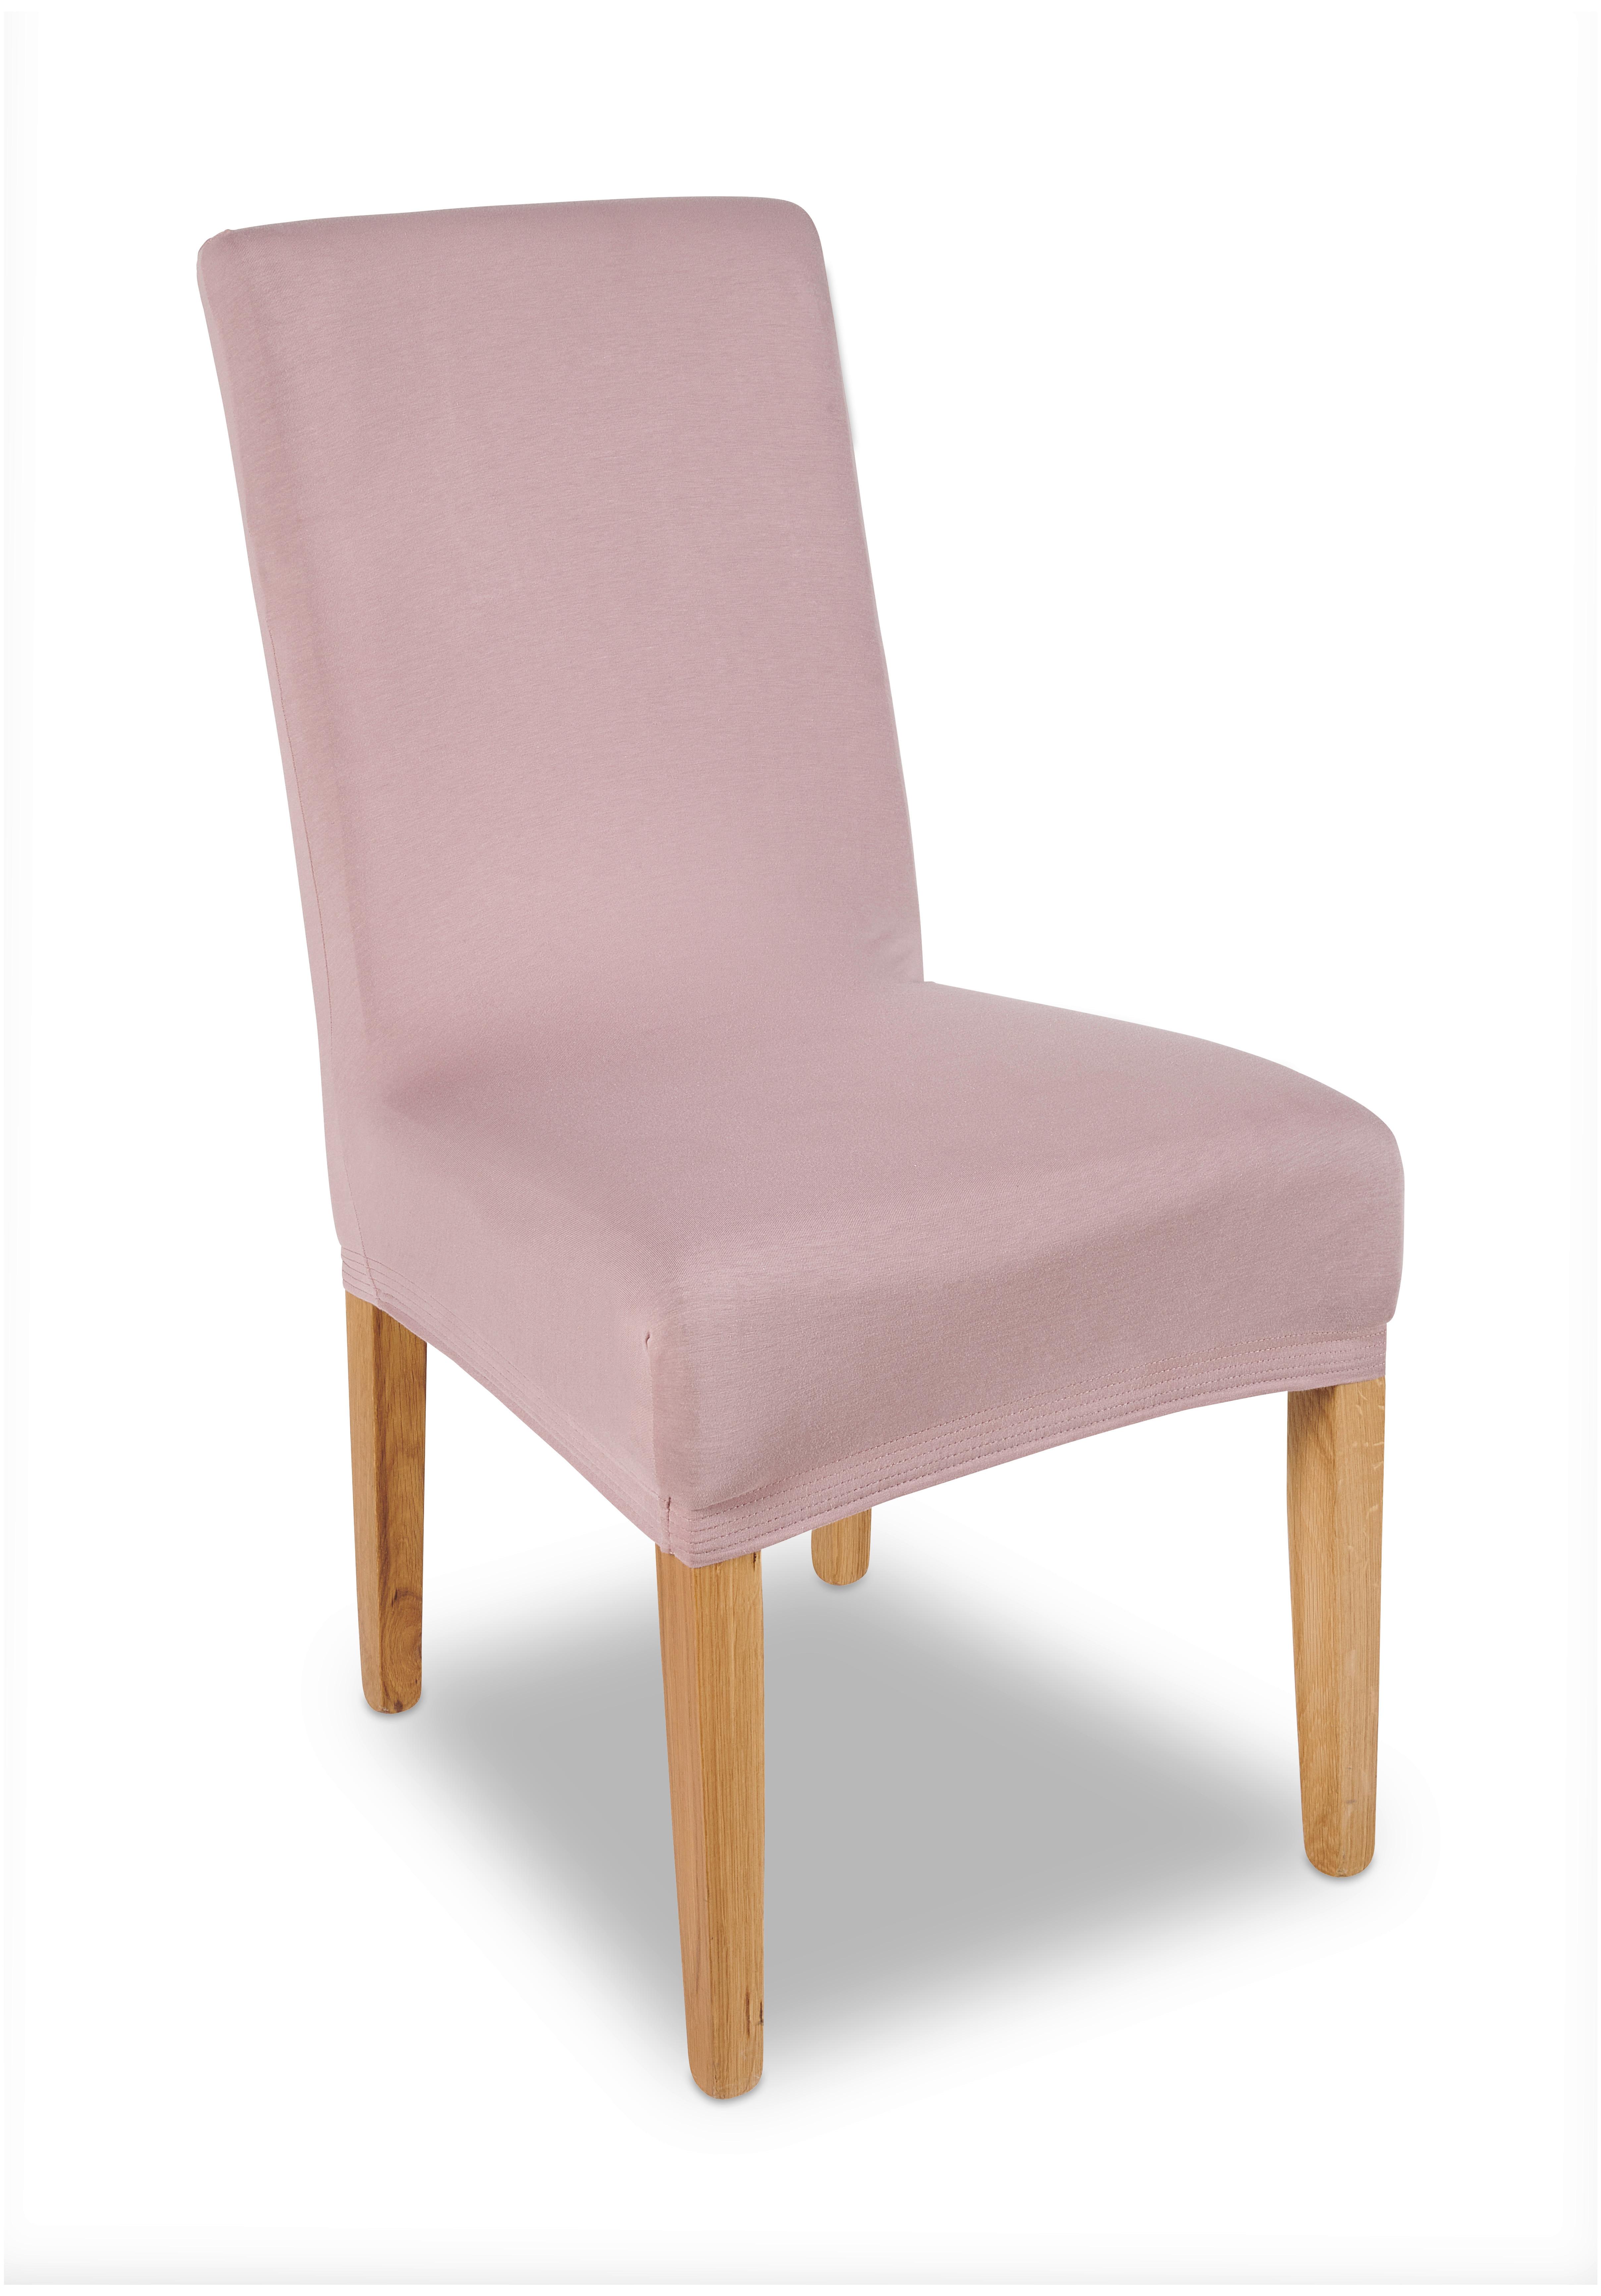 Husă pentru scaun Steffi in Mauve - mov, Konventionell, textil (47/47/67cm) - Modern Living